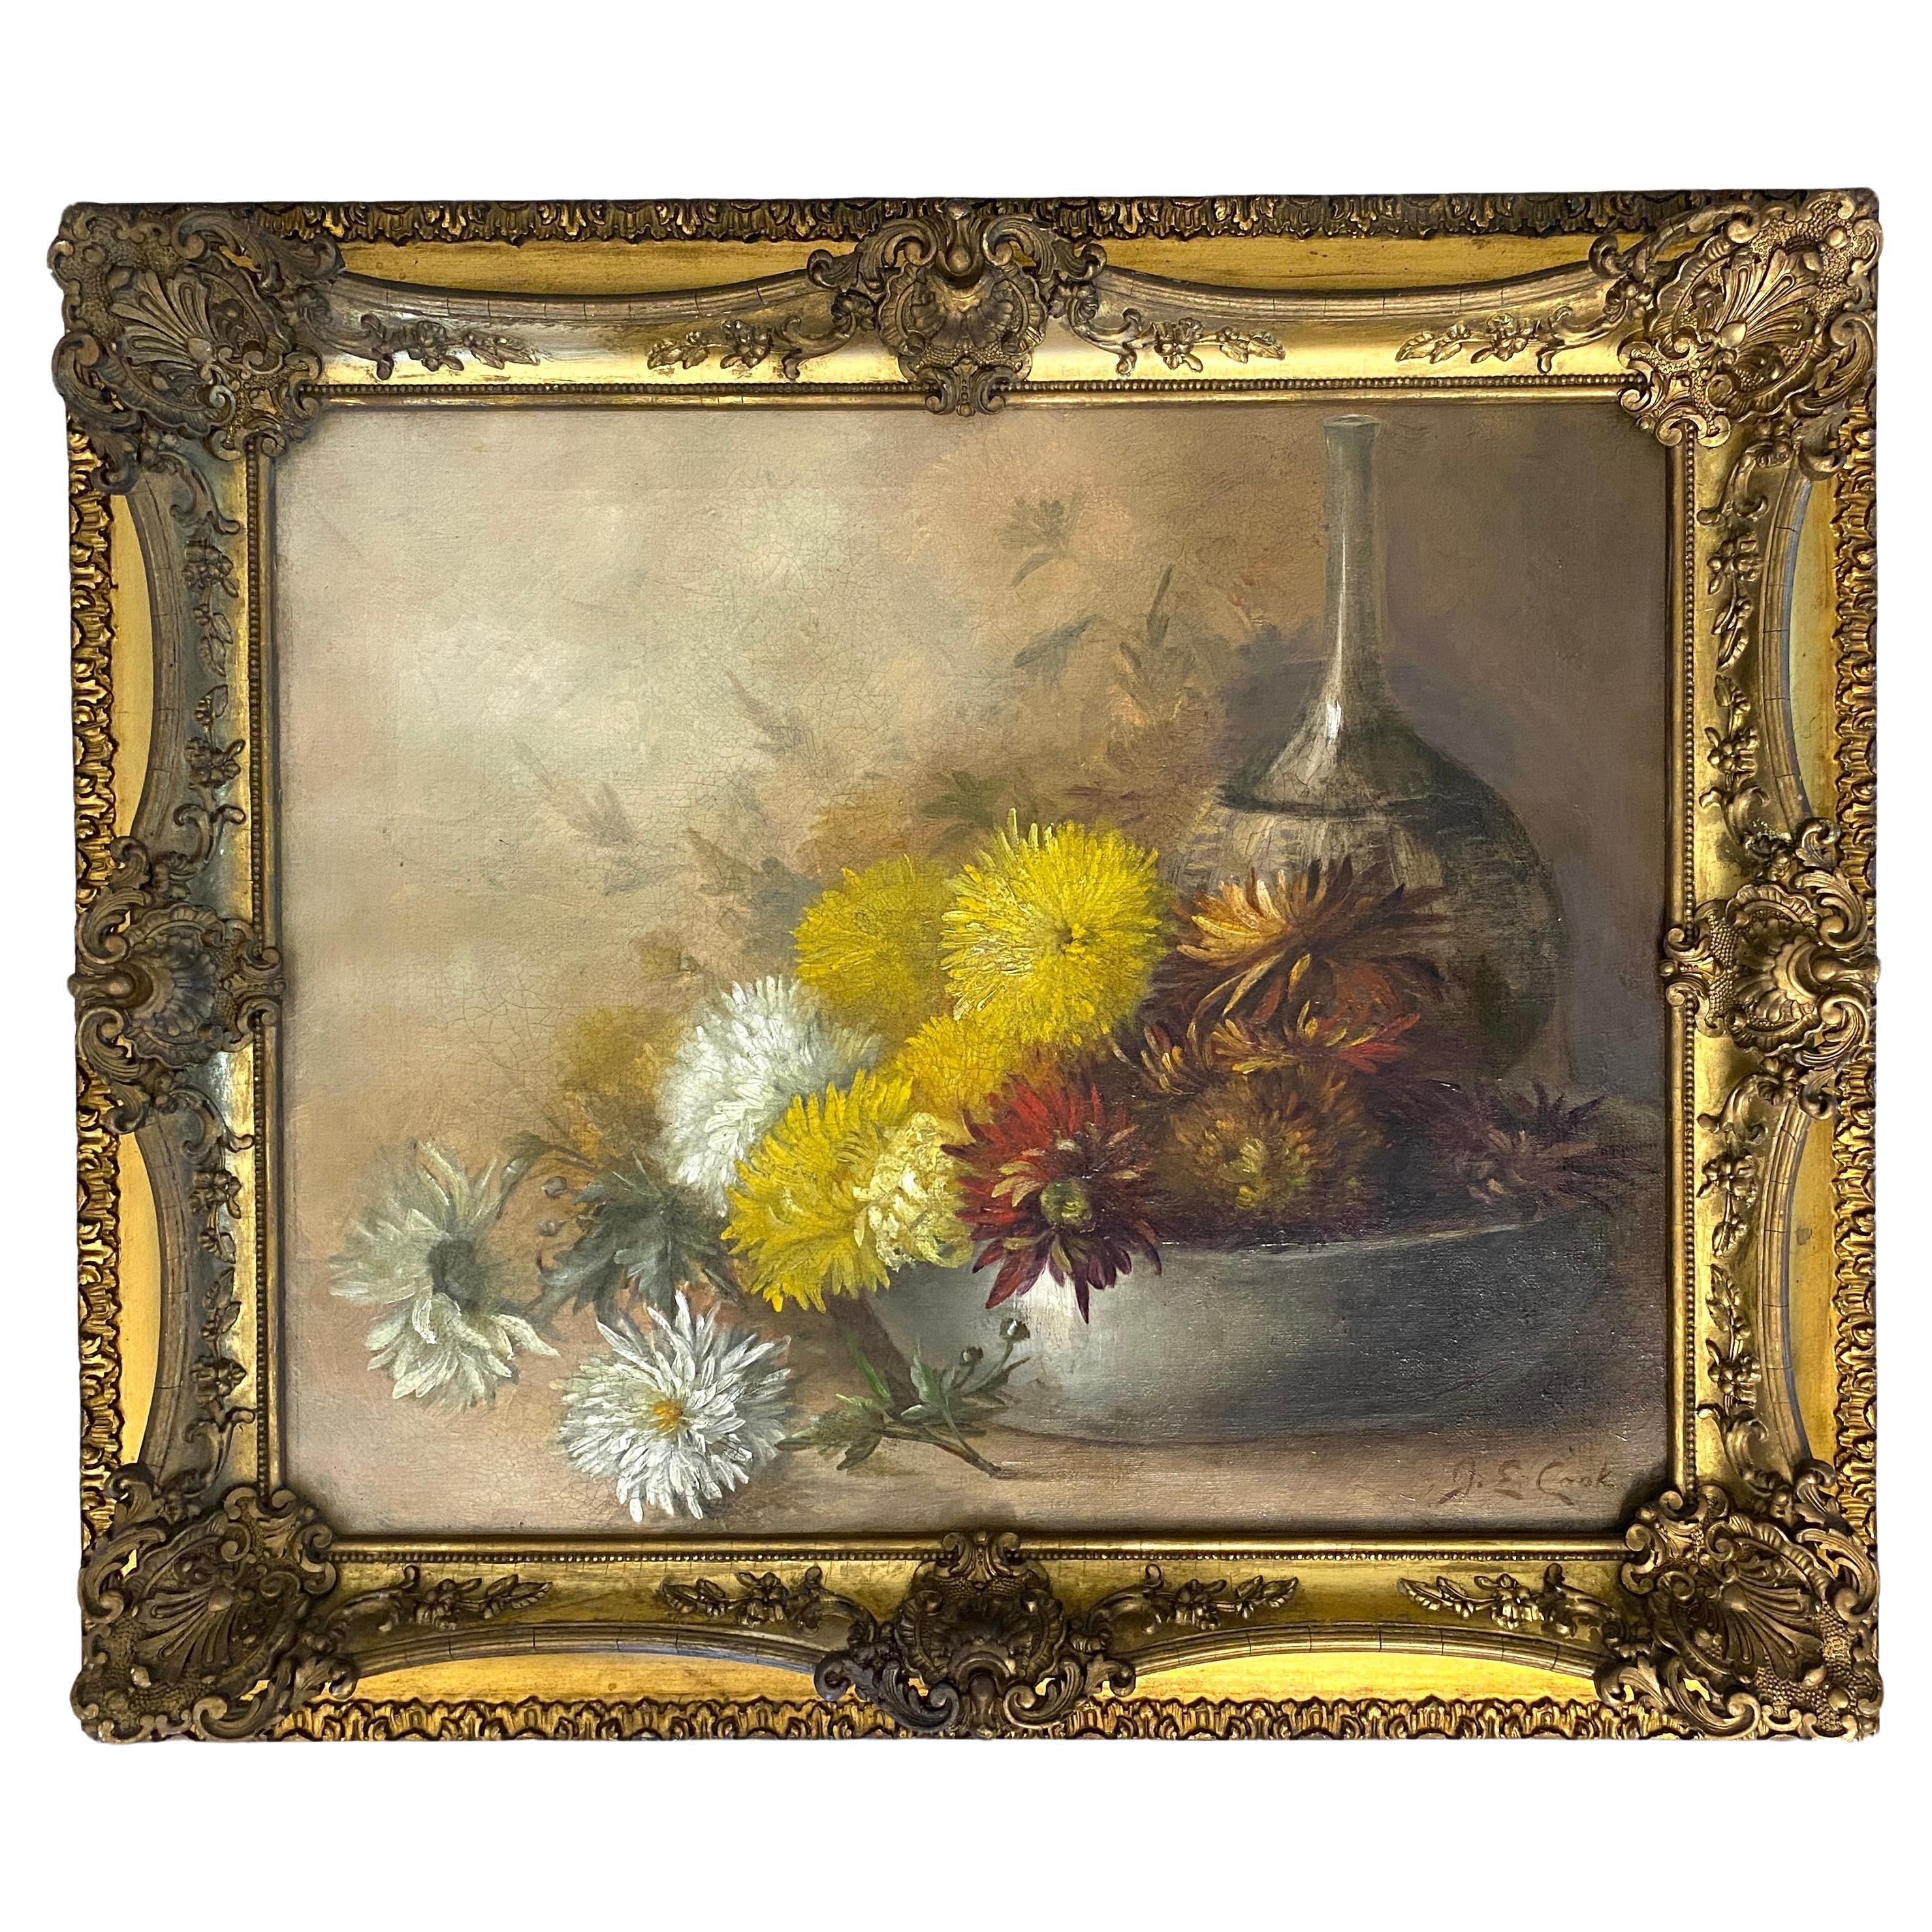 Stillleben, Ölgemälde mit Blumen, 20. Jahrhundert, signiert J.E. Kochen 